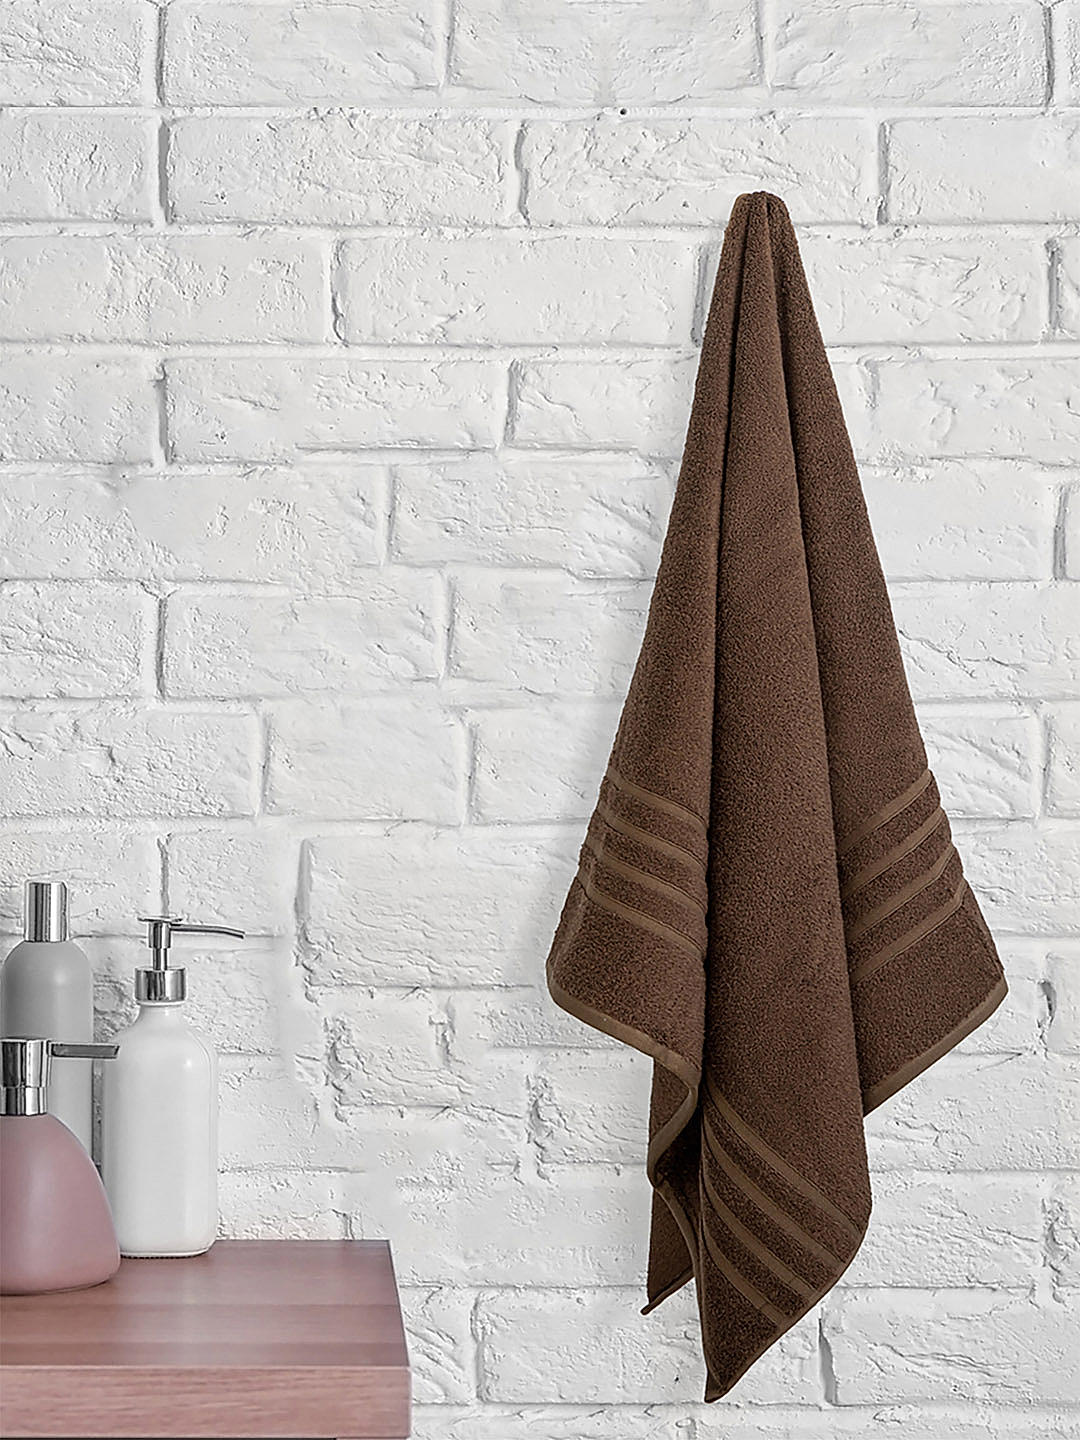 Kalpavriksha 550 gsm 100% Organic Cotton Soft & Fluffy Brown Colored Bath Towel